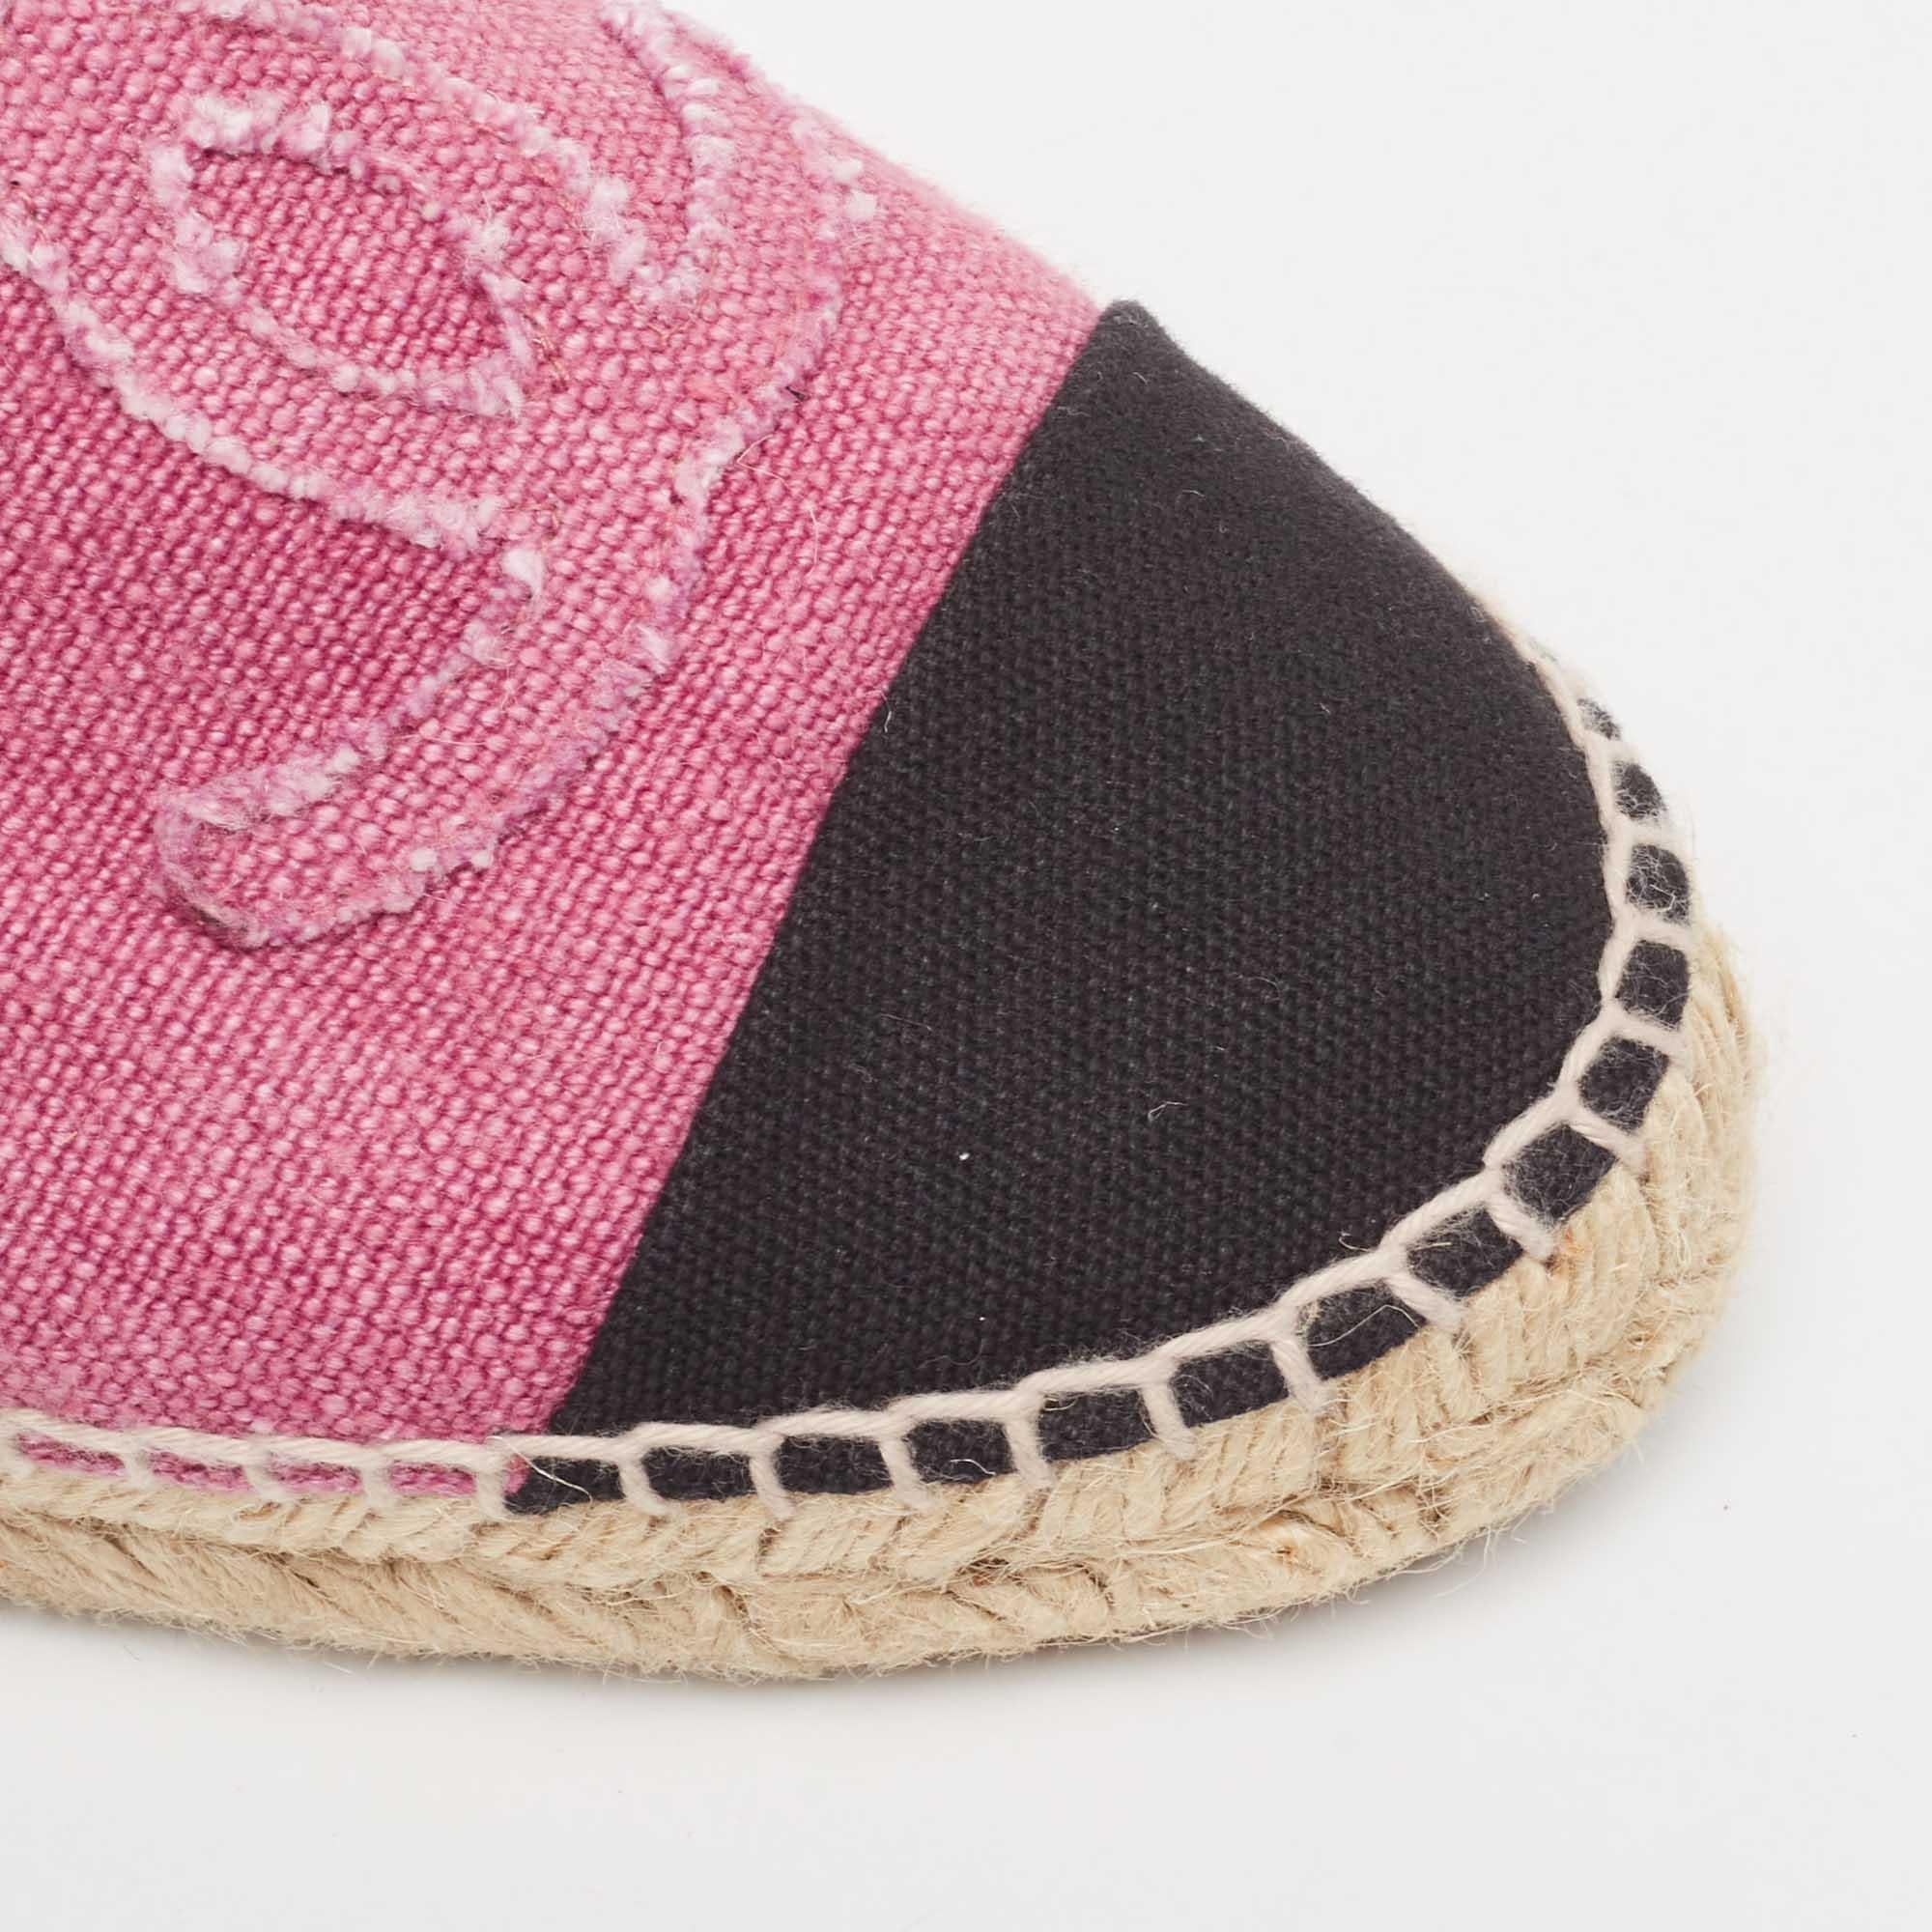 Chanel Pink/Black Canvas CC Espadrille Flats Size 39 3